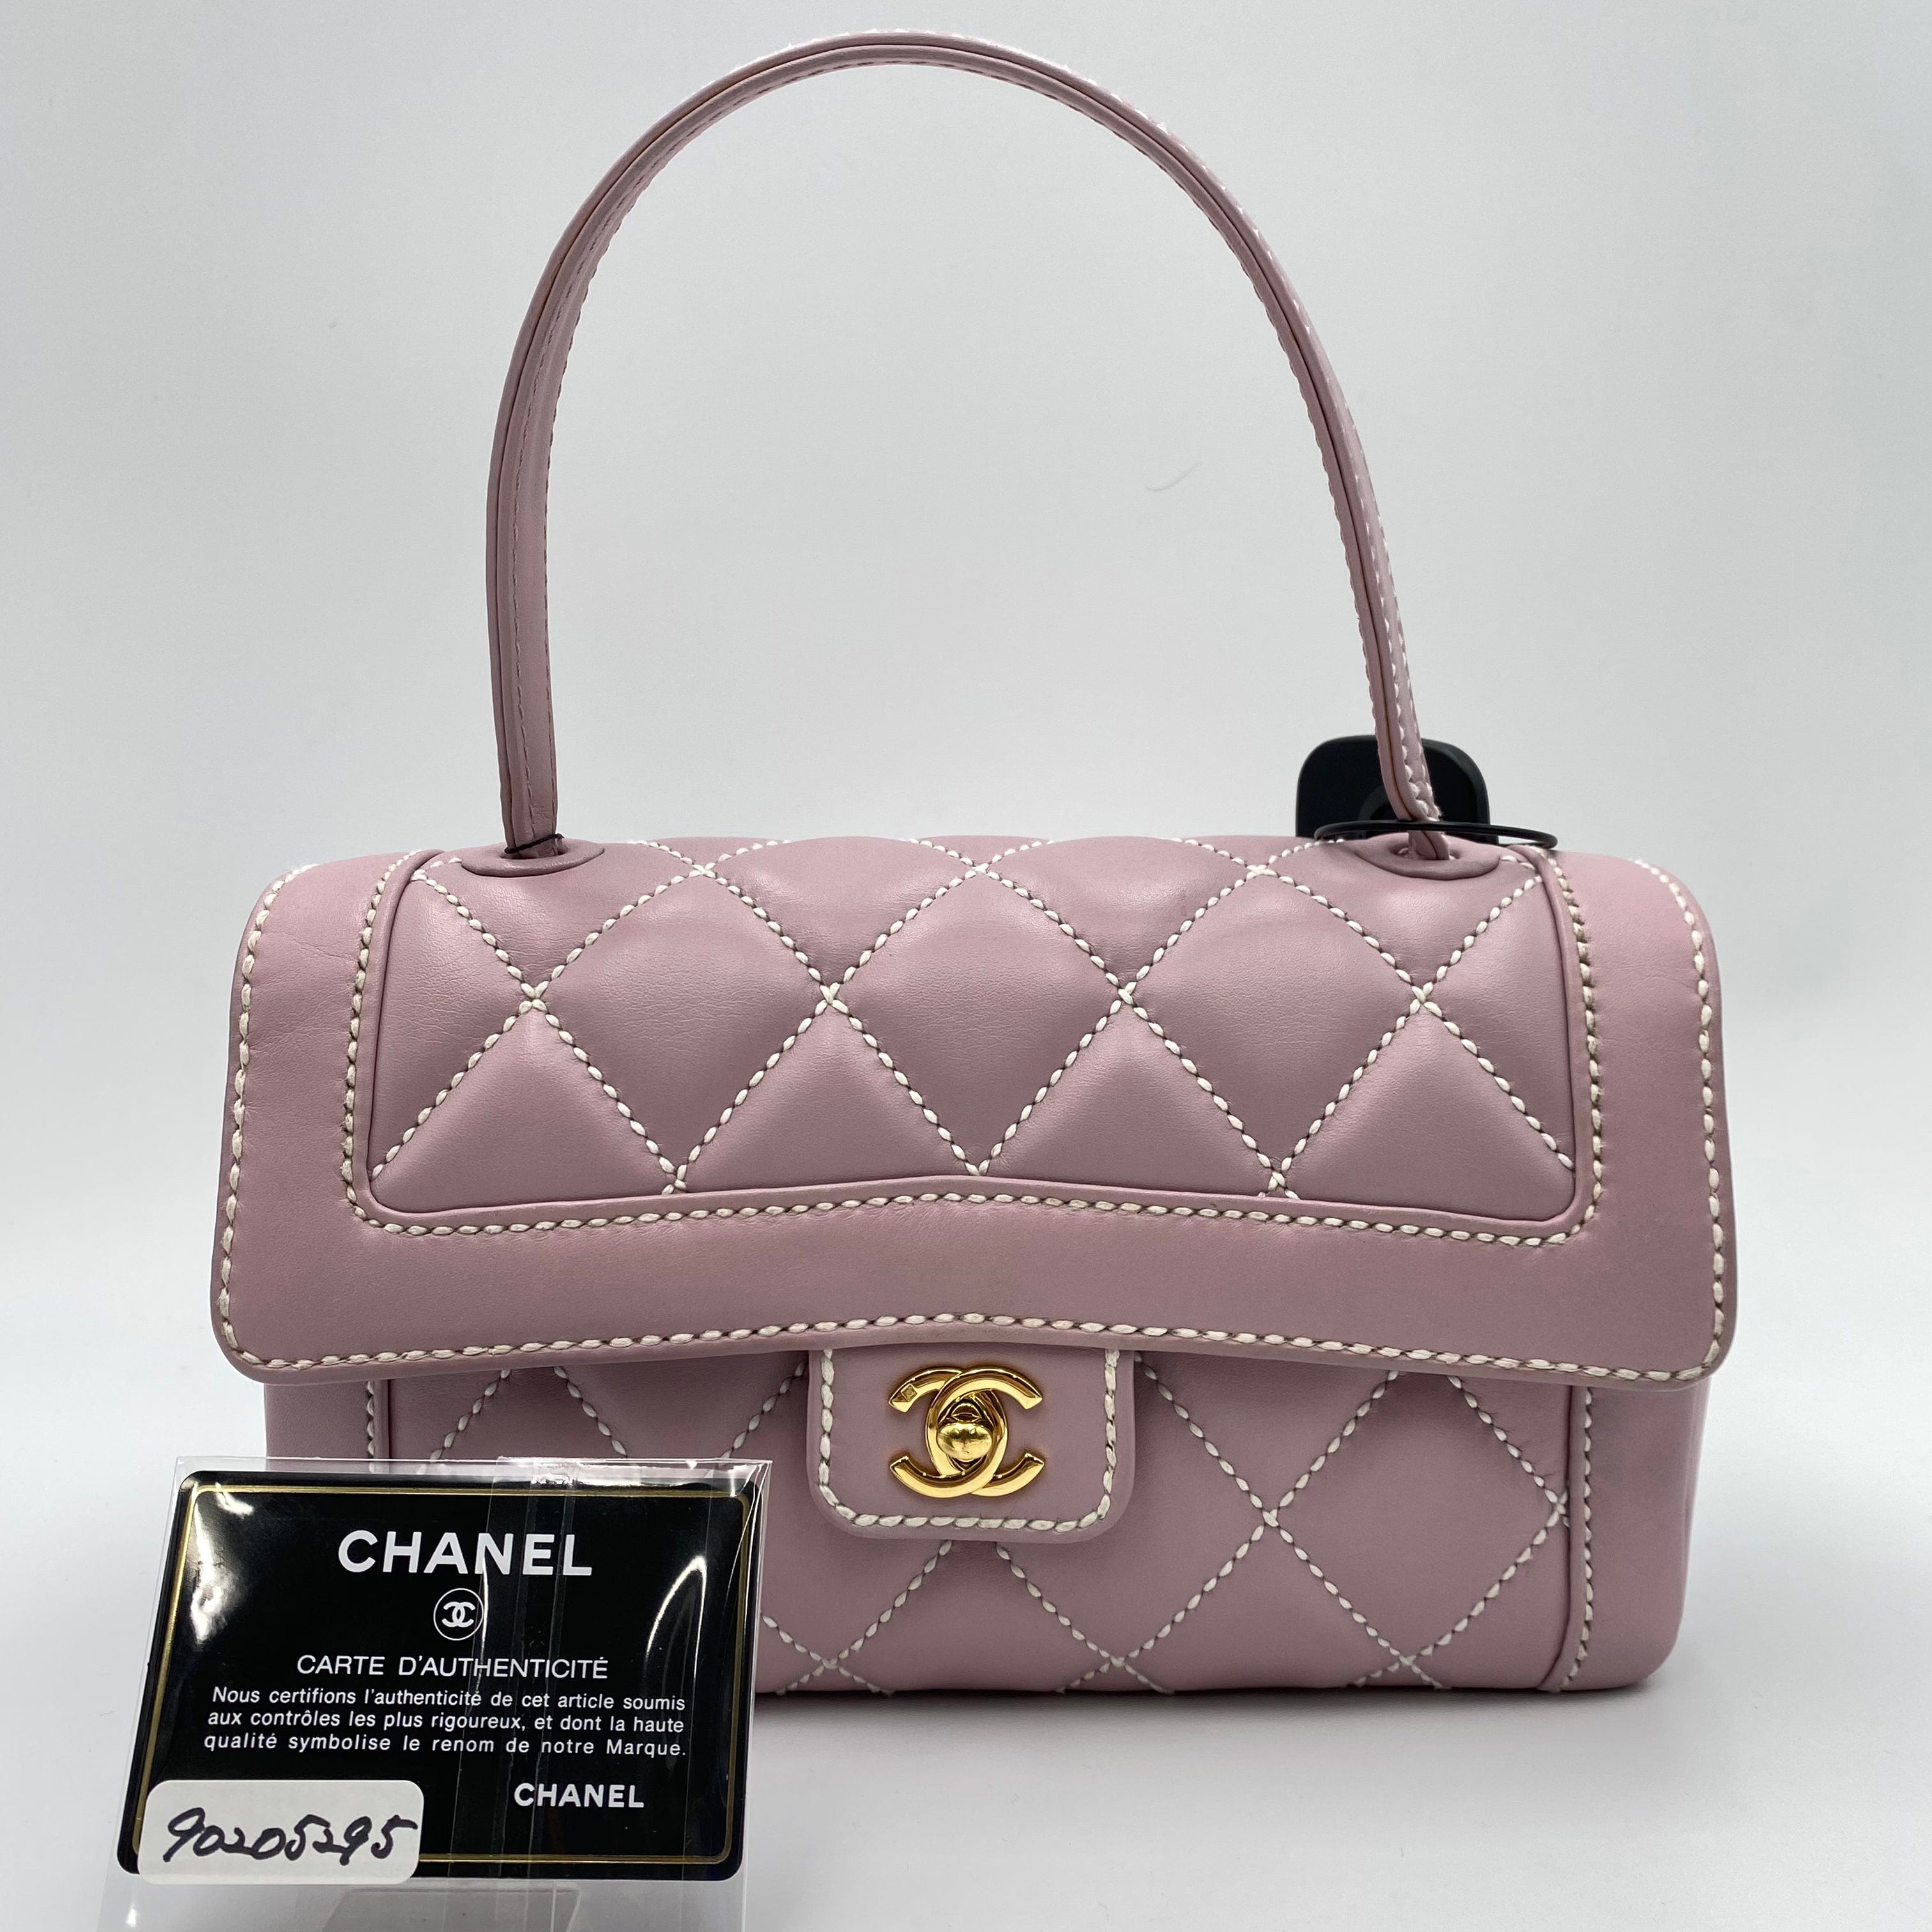 Chanel CHANEL VINTAGE WILD STITCH HAND BAG PURPLE LAMB SKIN 90205295